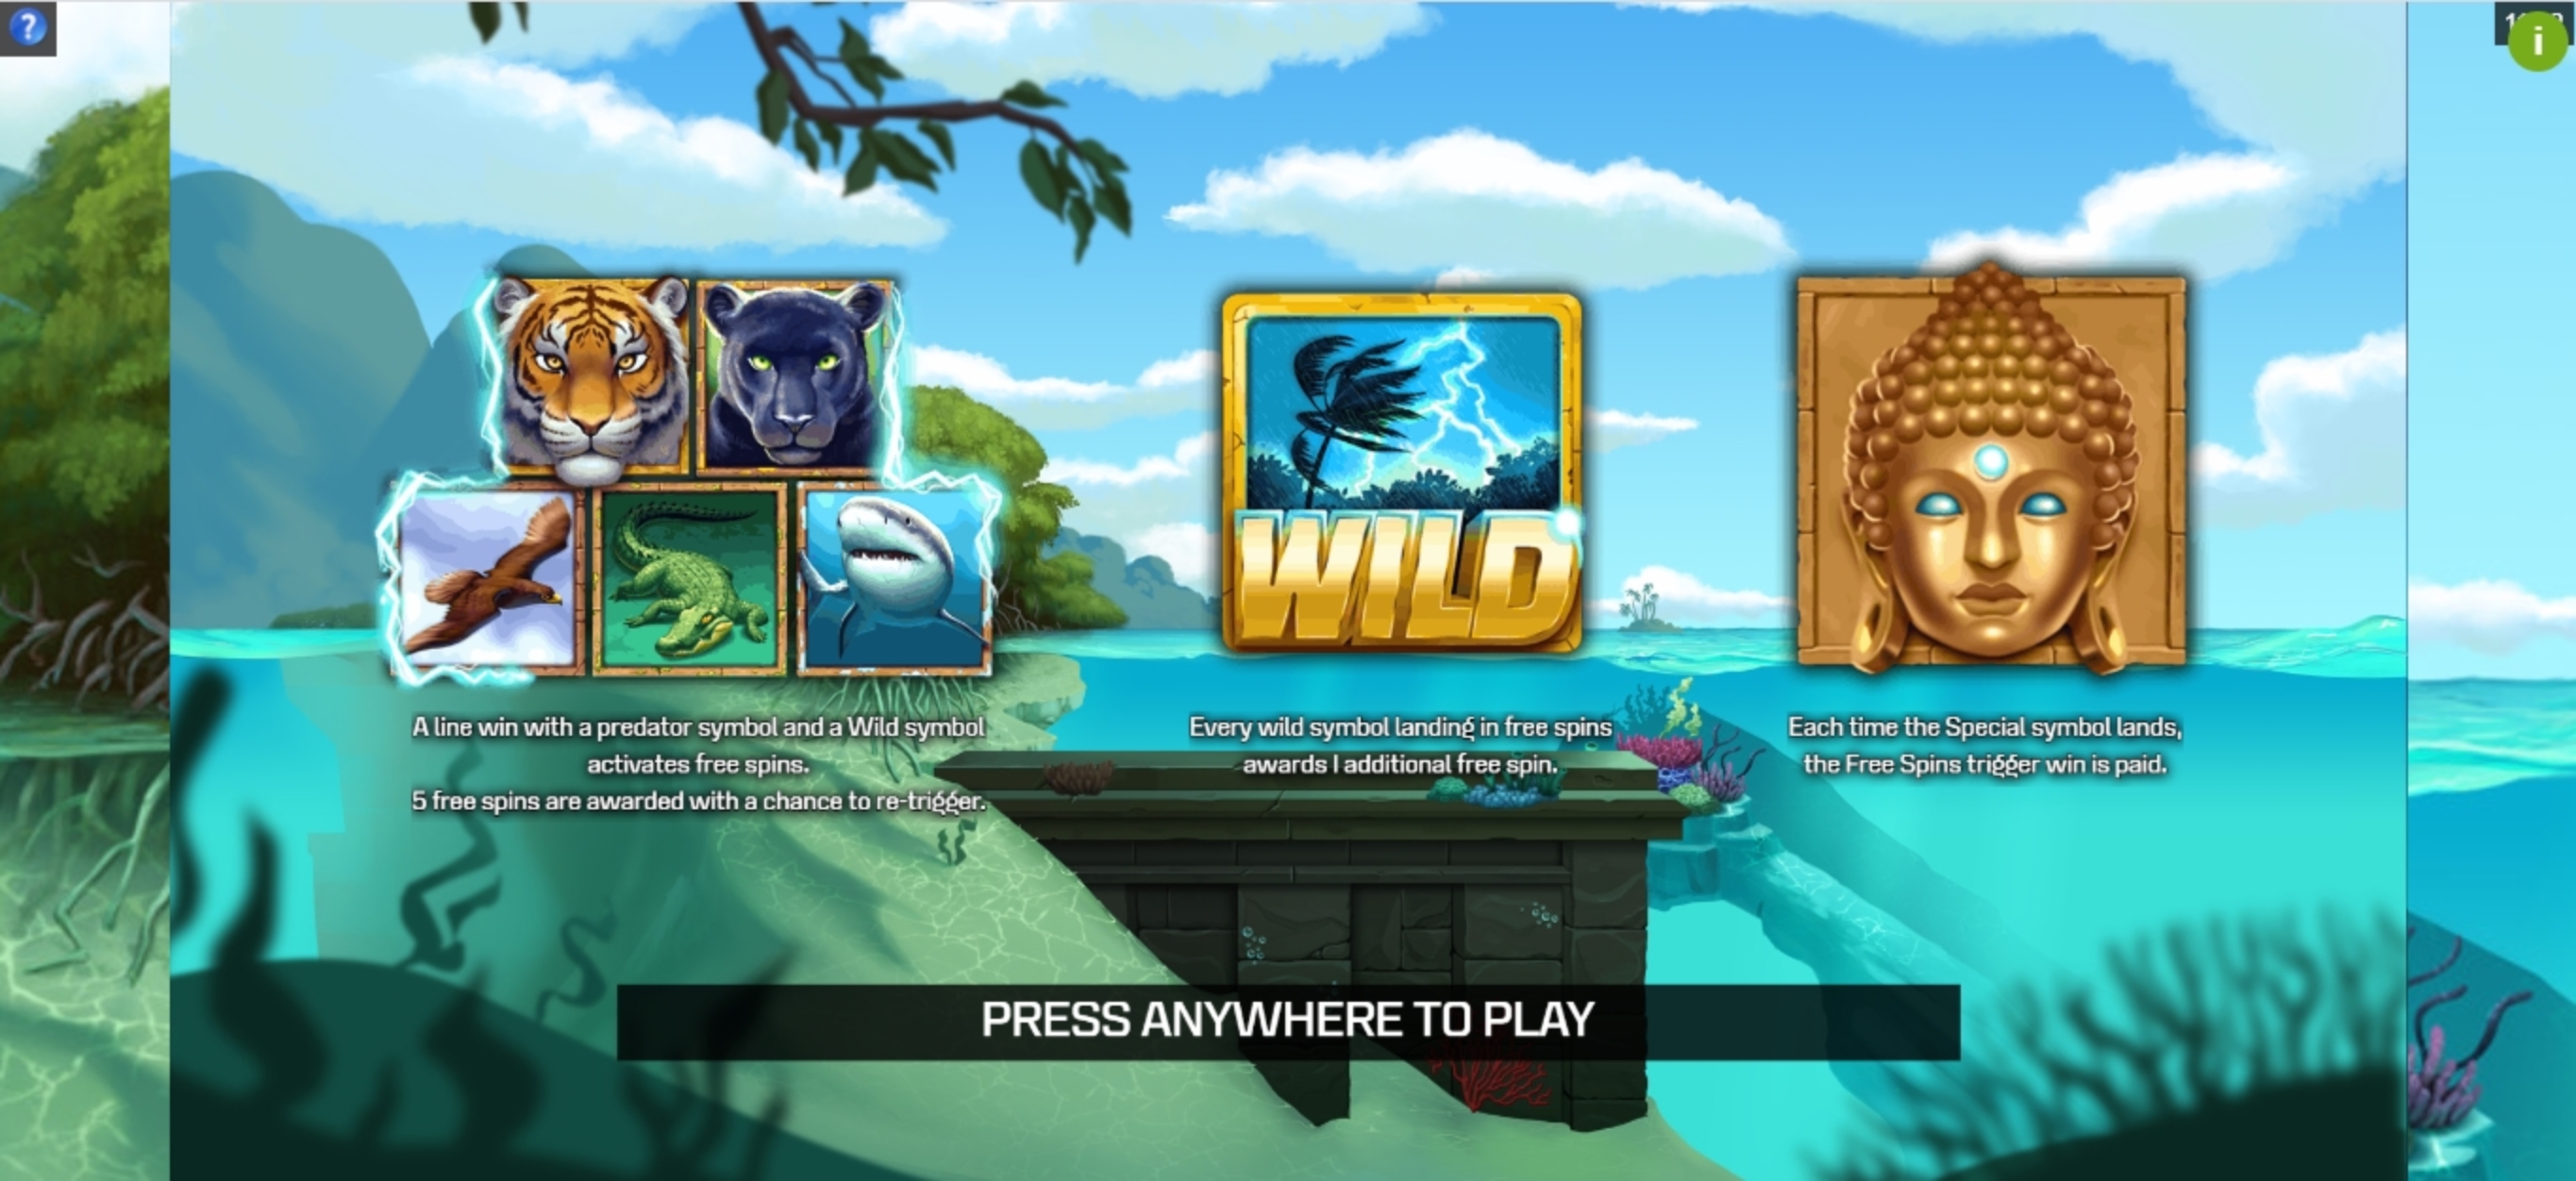 Play Wild Predators Free Casino Slot Game by Golden Rock Studios